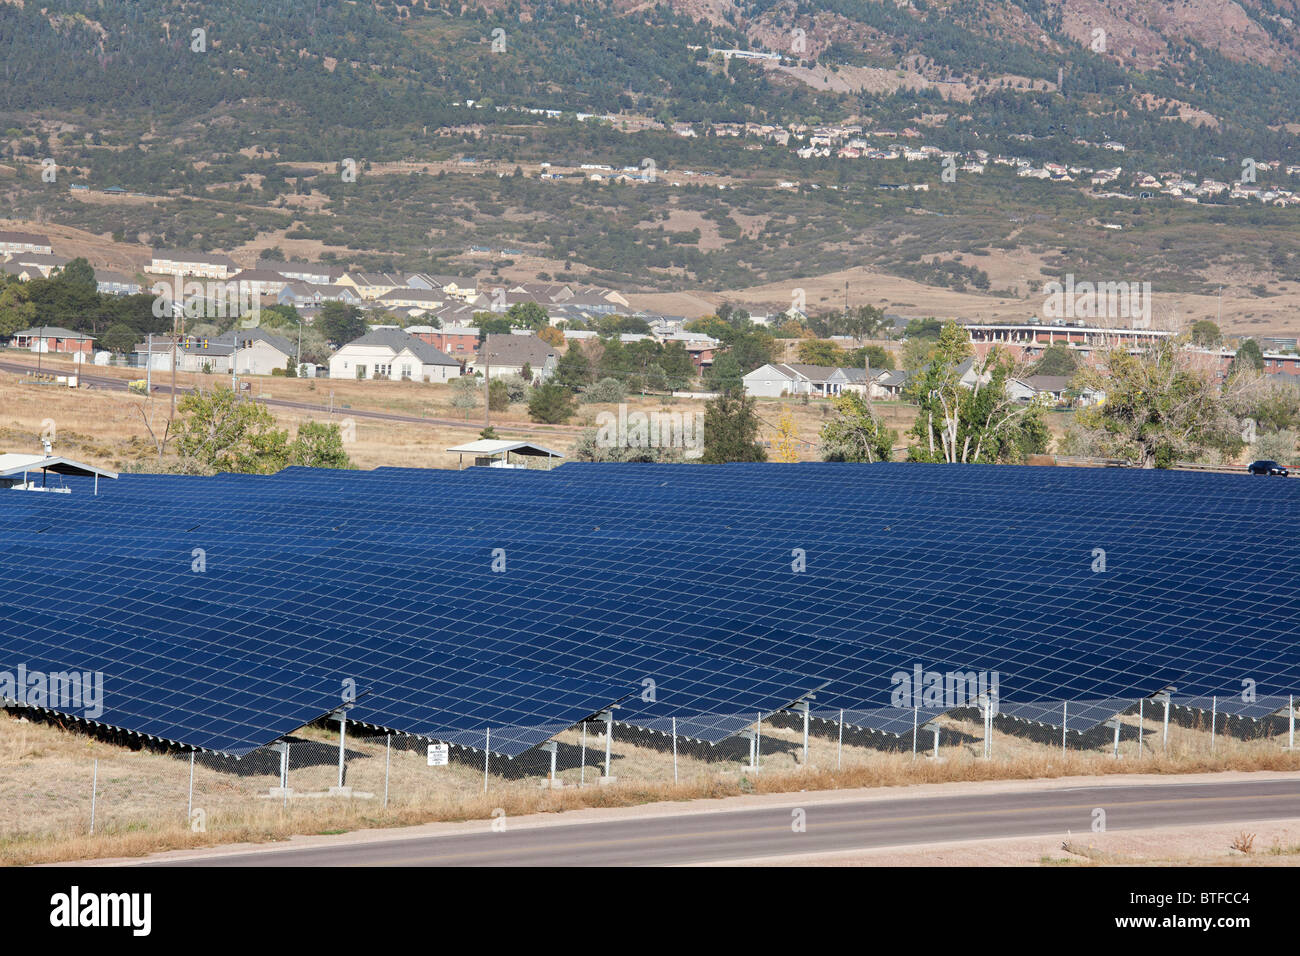 Solar Farm Built on Top of Former Landfill Stock Photo